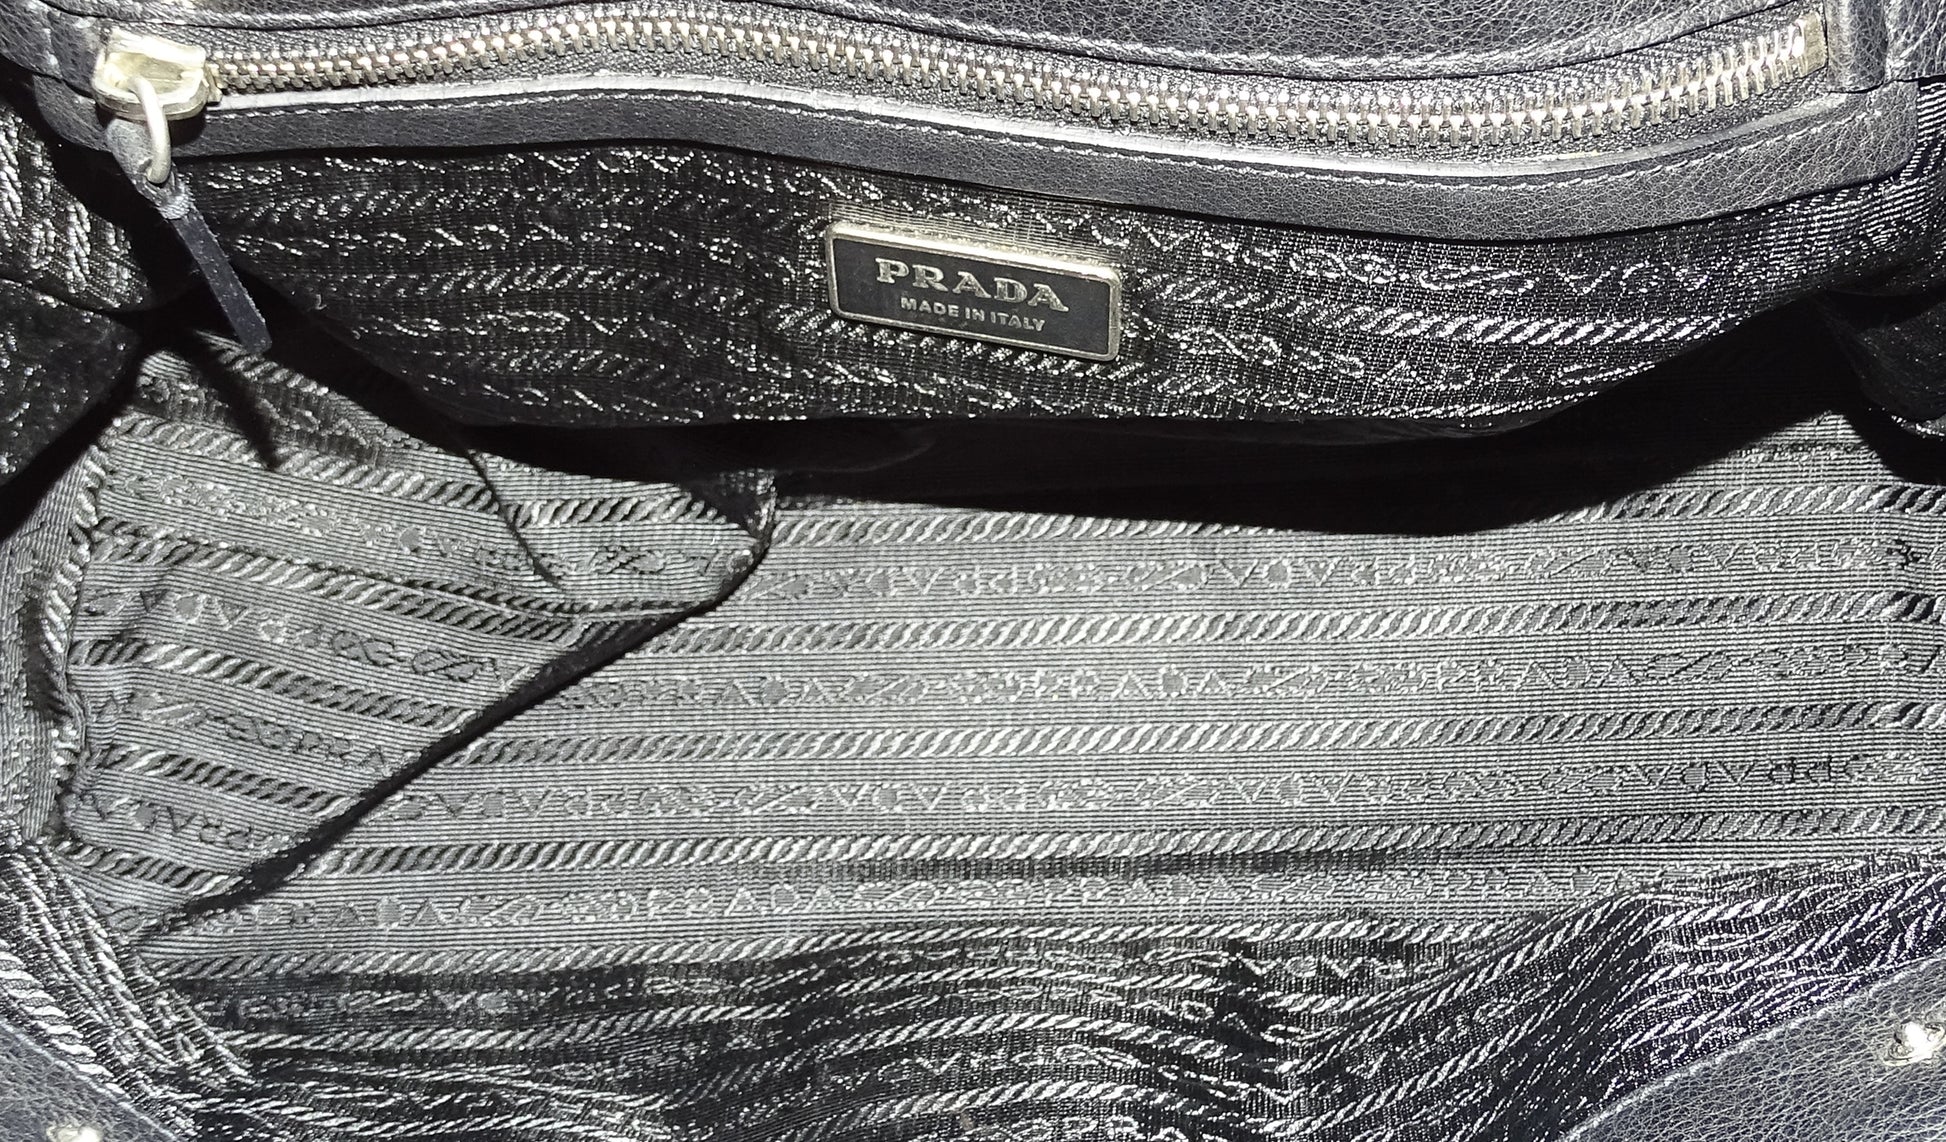 Boston Medium Leather Tote Bag in Grey - Prada